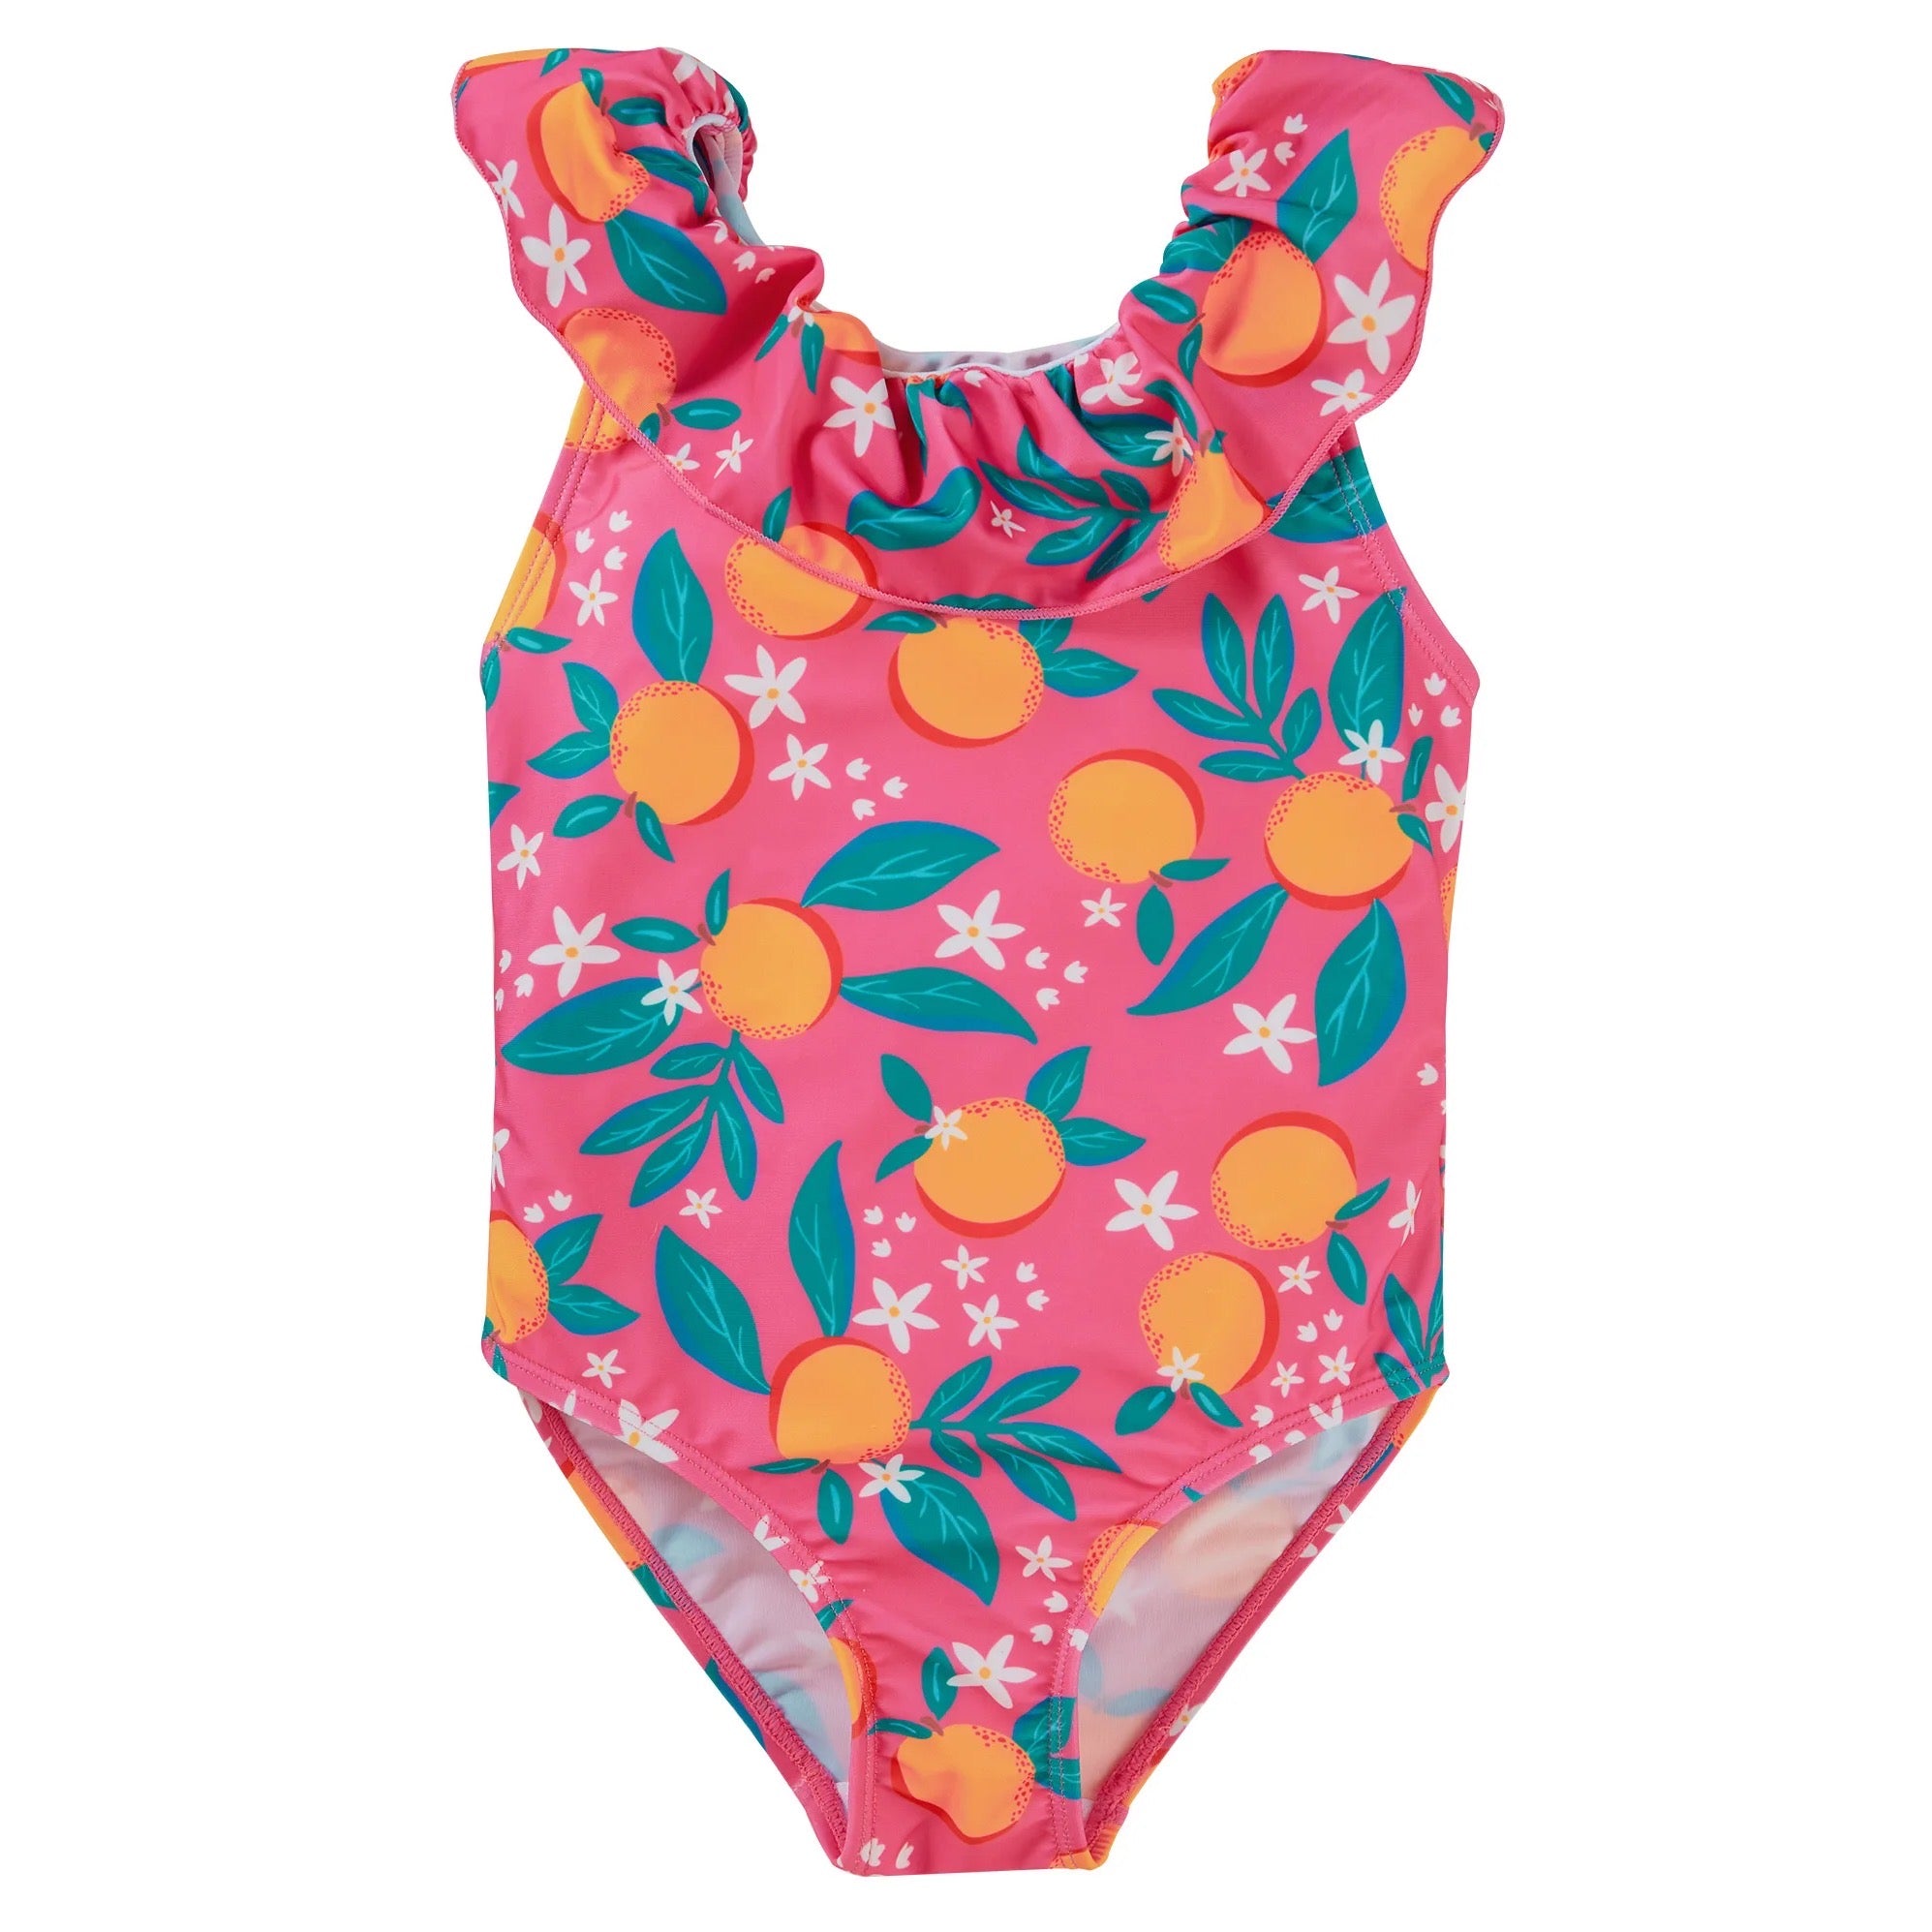 Frugi Amelia Orange Blossom Swimsuit Pl7pi Clothing 3-4YRS / Pink,4-5YRS / Pink,5-6YRS / Pink,6-7YRS / Pink,7-8YRS / Pink